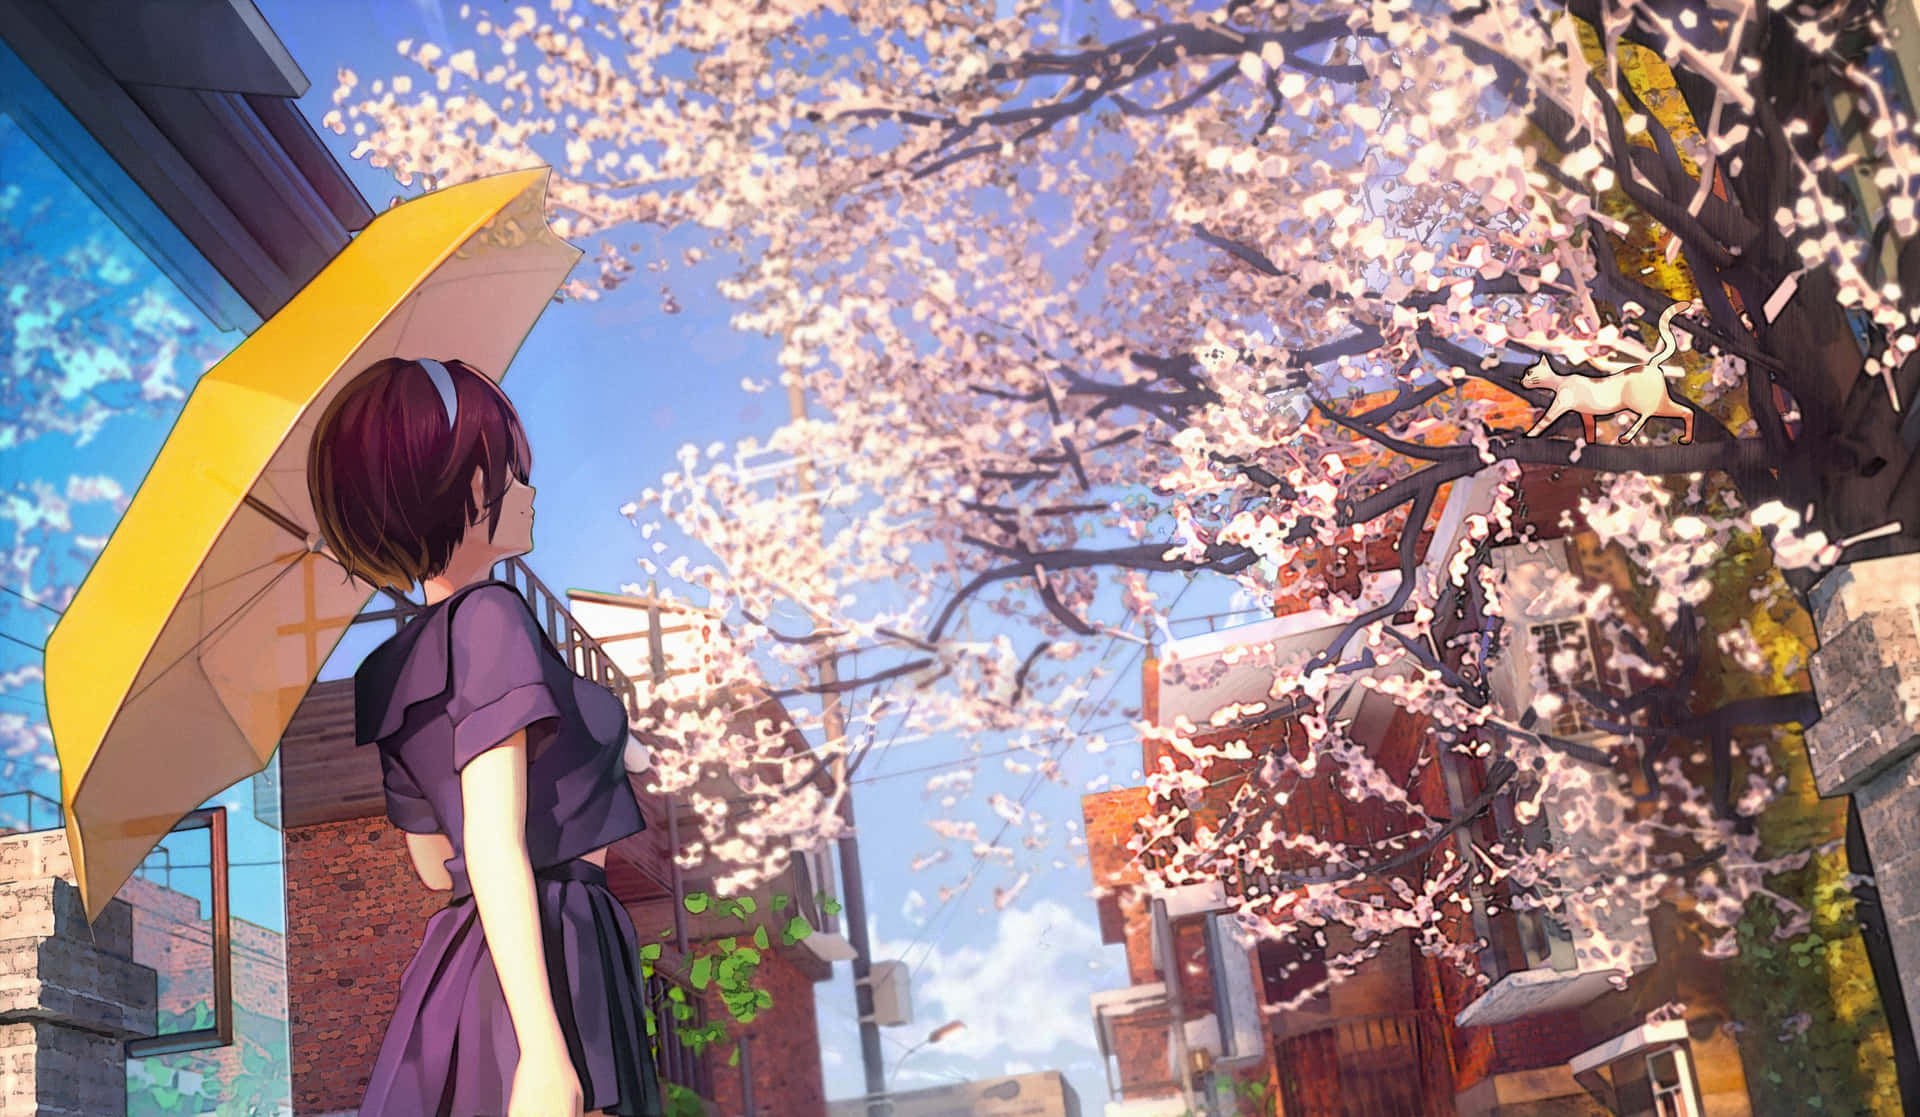 Download Anime Cherry Blossom Umbrella Girl Background